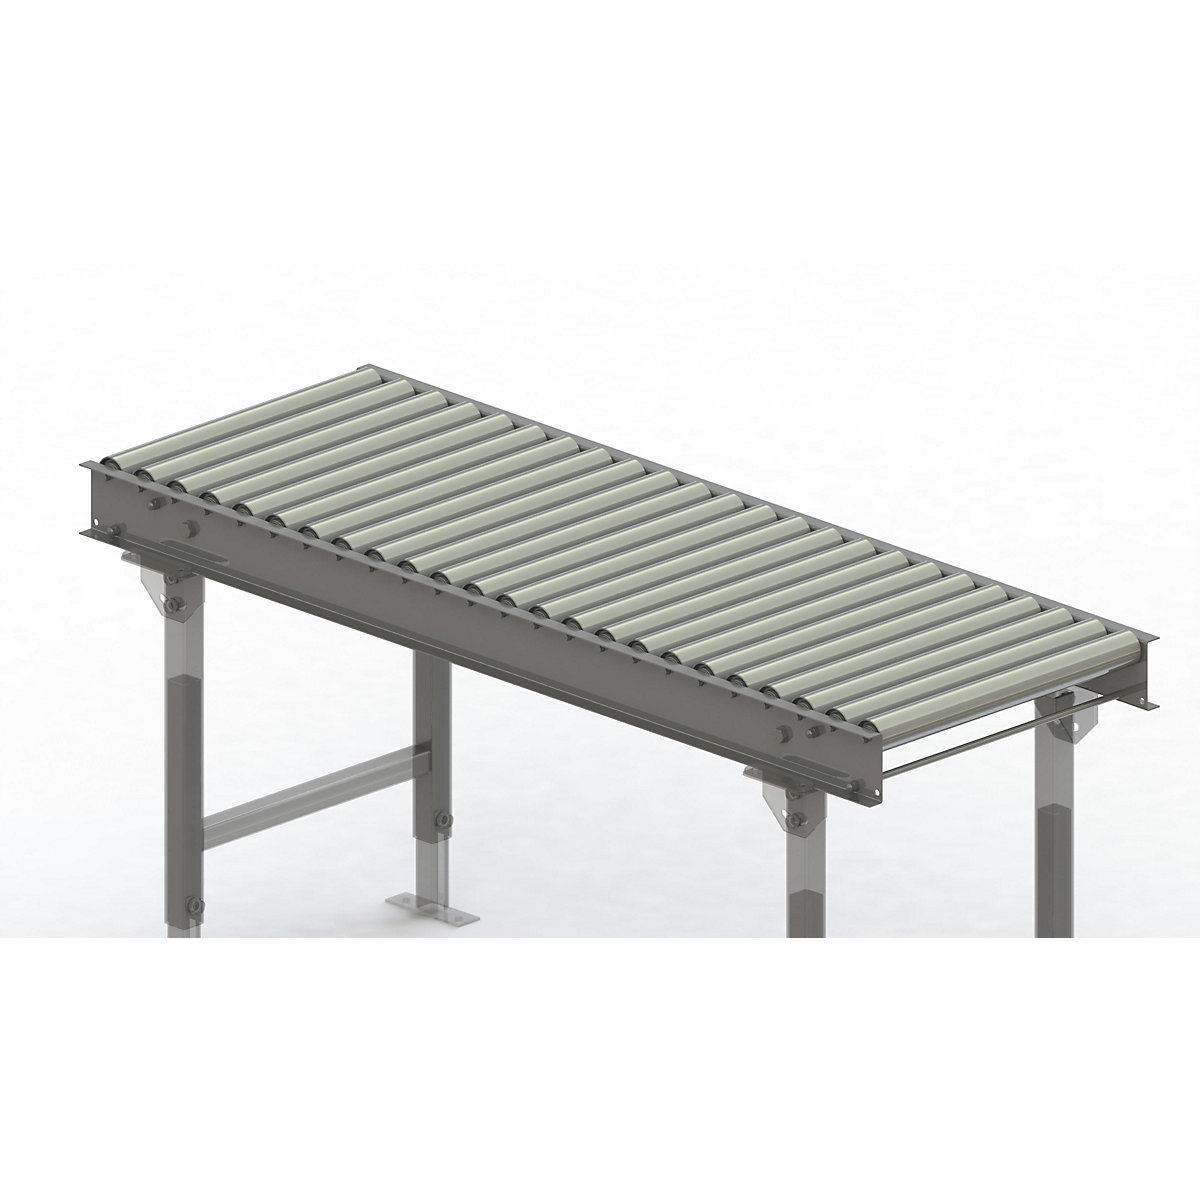 Gura – Roller conveyor, steel frame with zinc plated steel rollers, track width 500 mm, distance between axles 62.5 mm, length 1.5 m